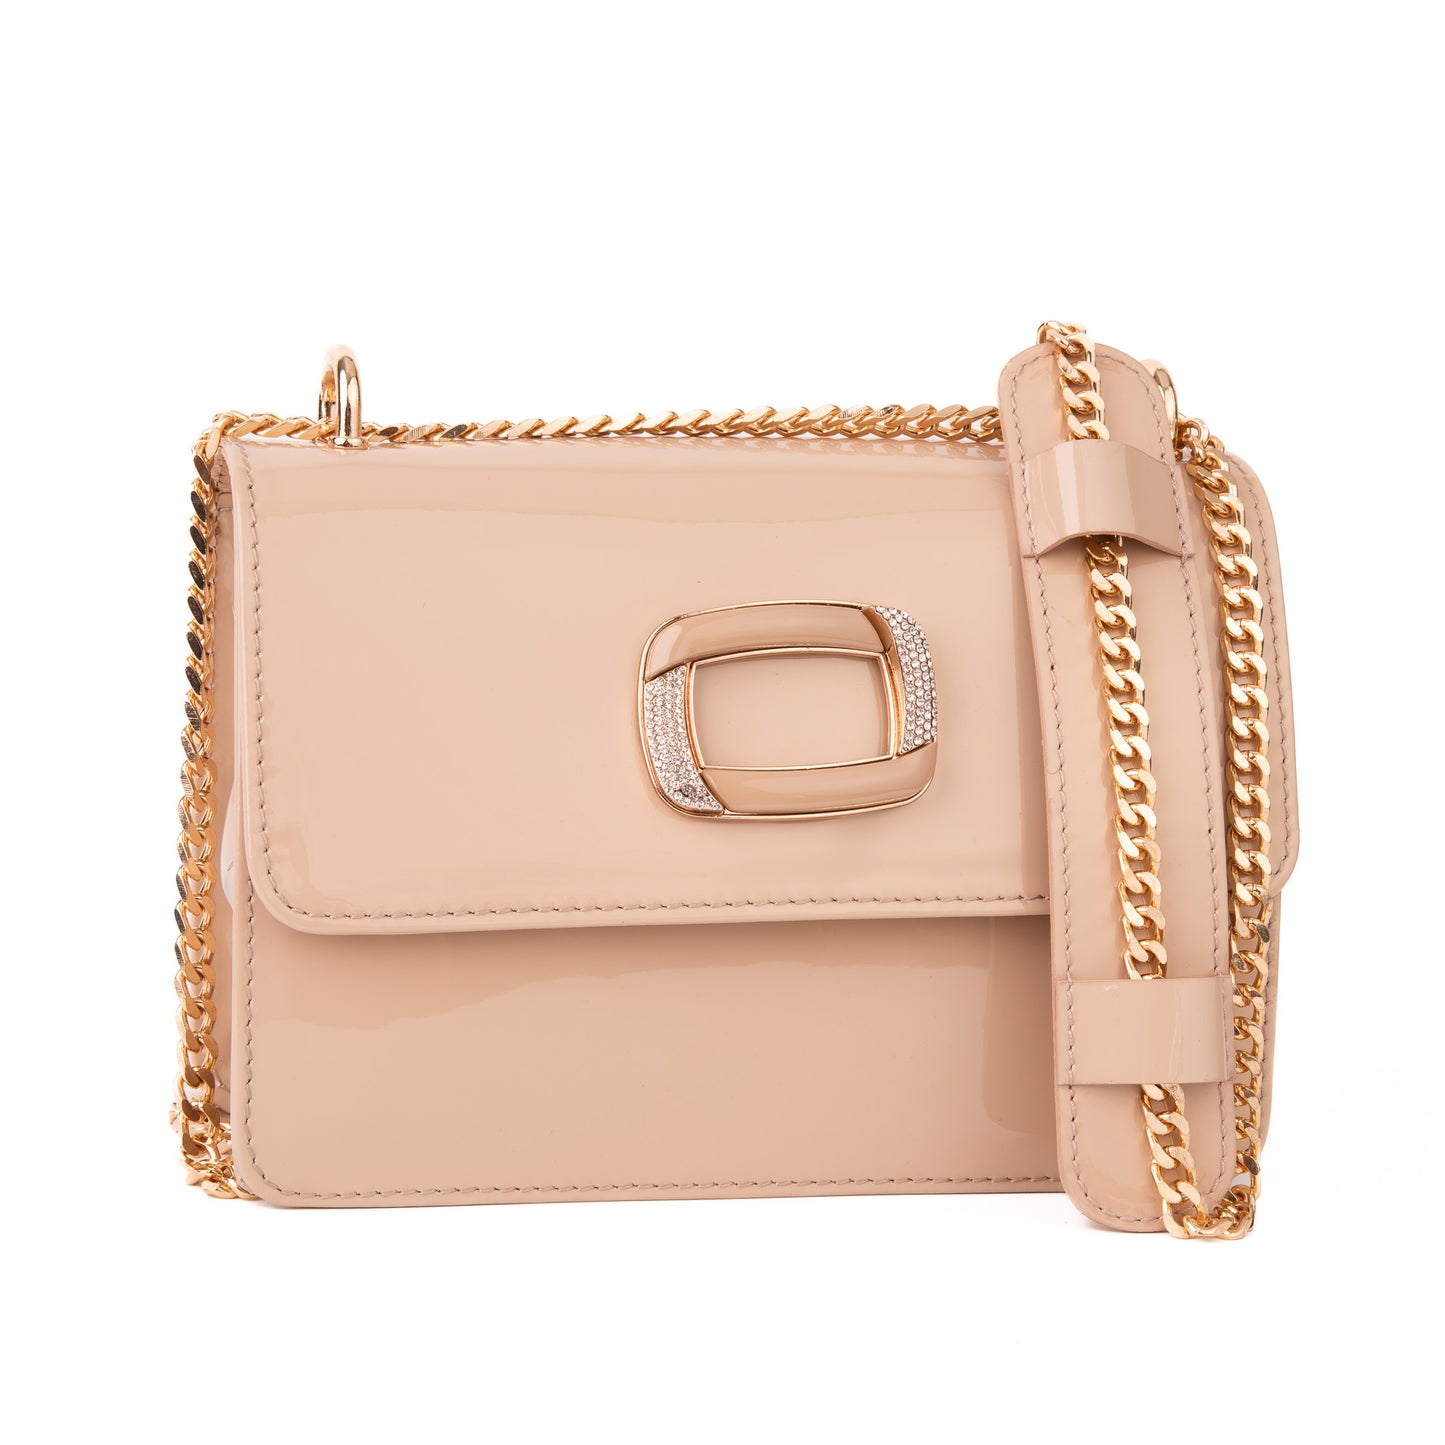 The Ferrara Cream Patent Leather Handbag